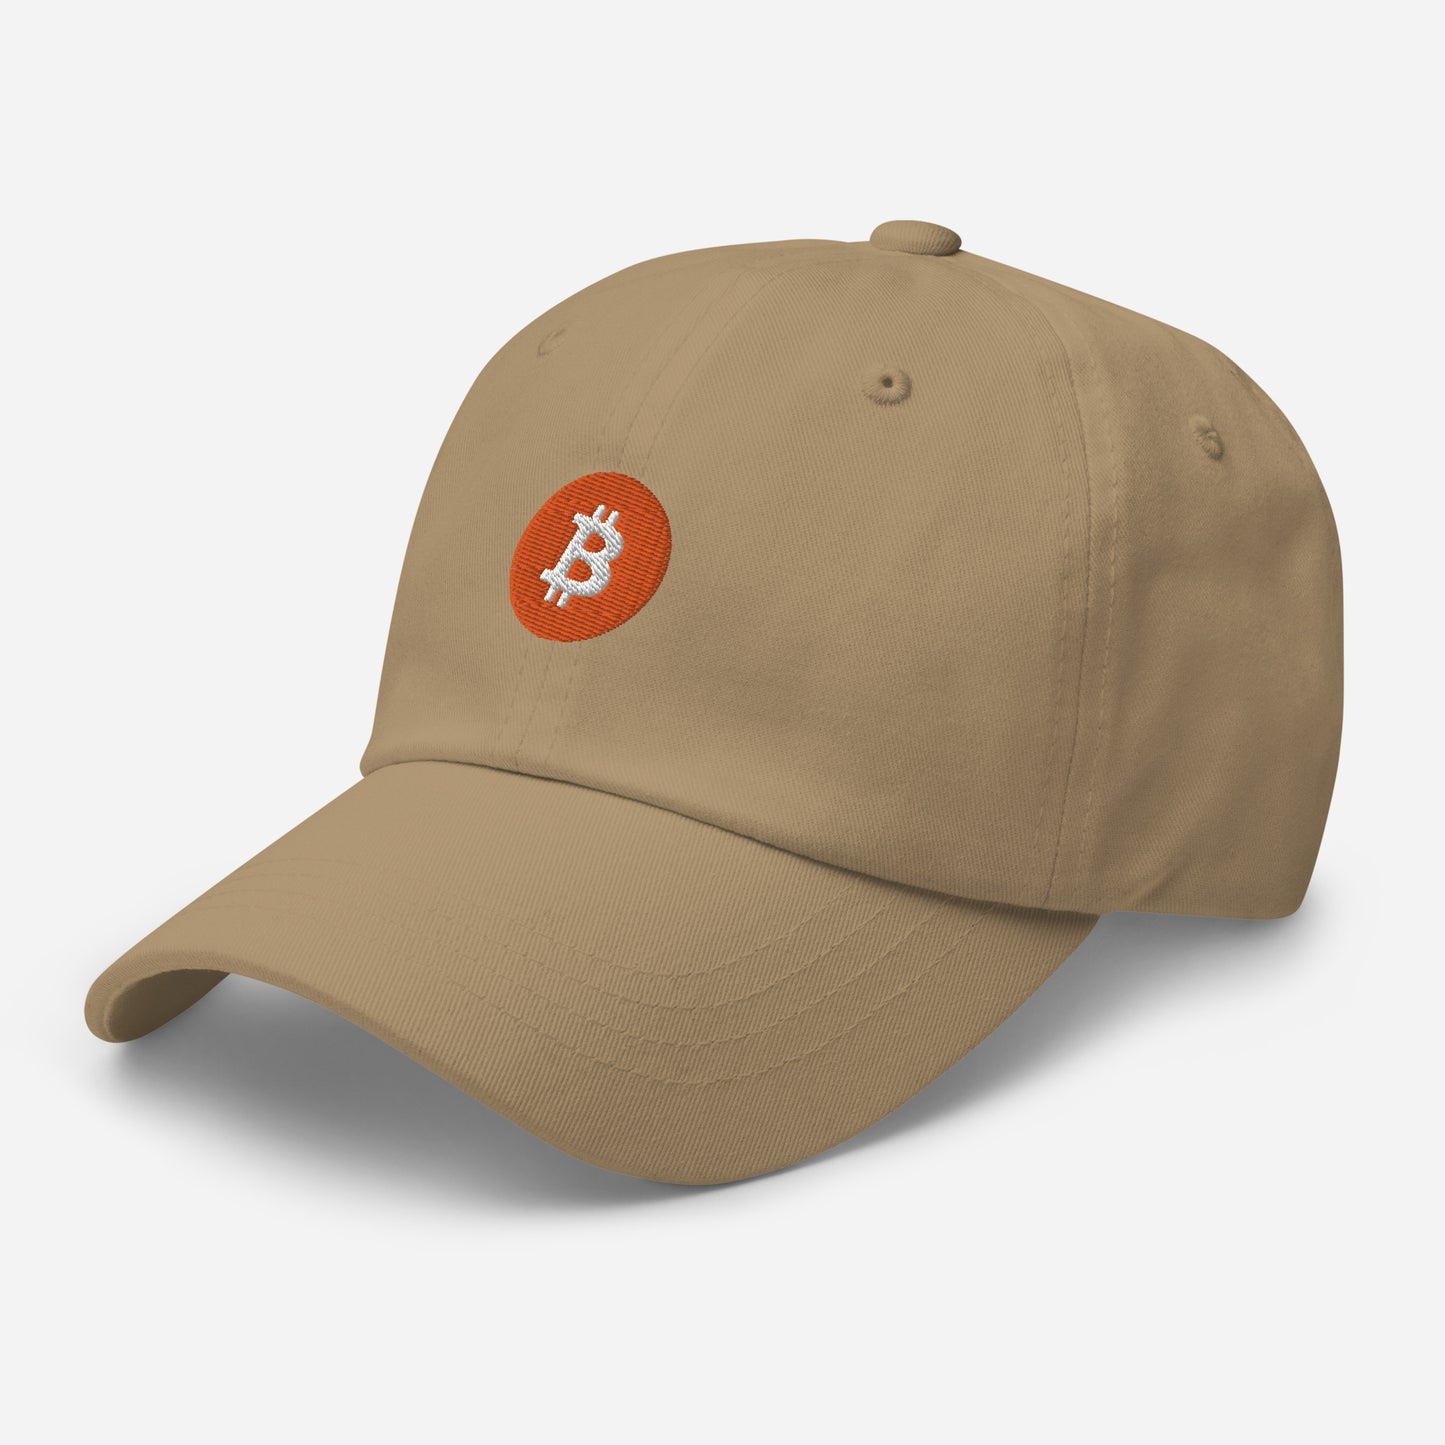 Bitcoin (BTC) - Fitted baseball cap